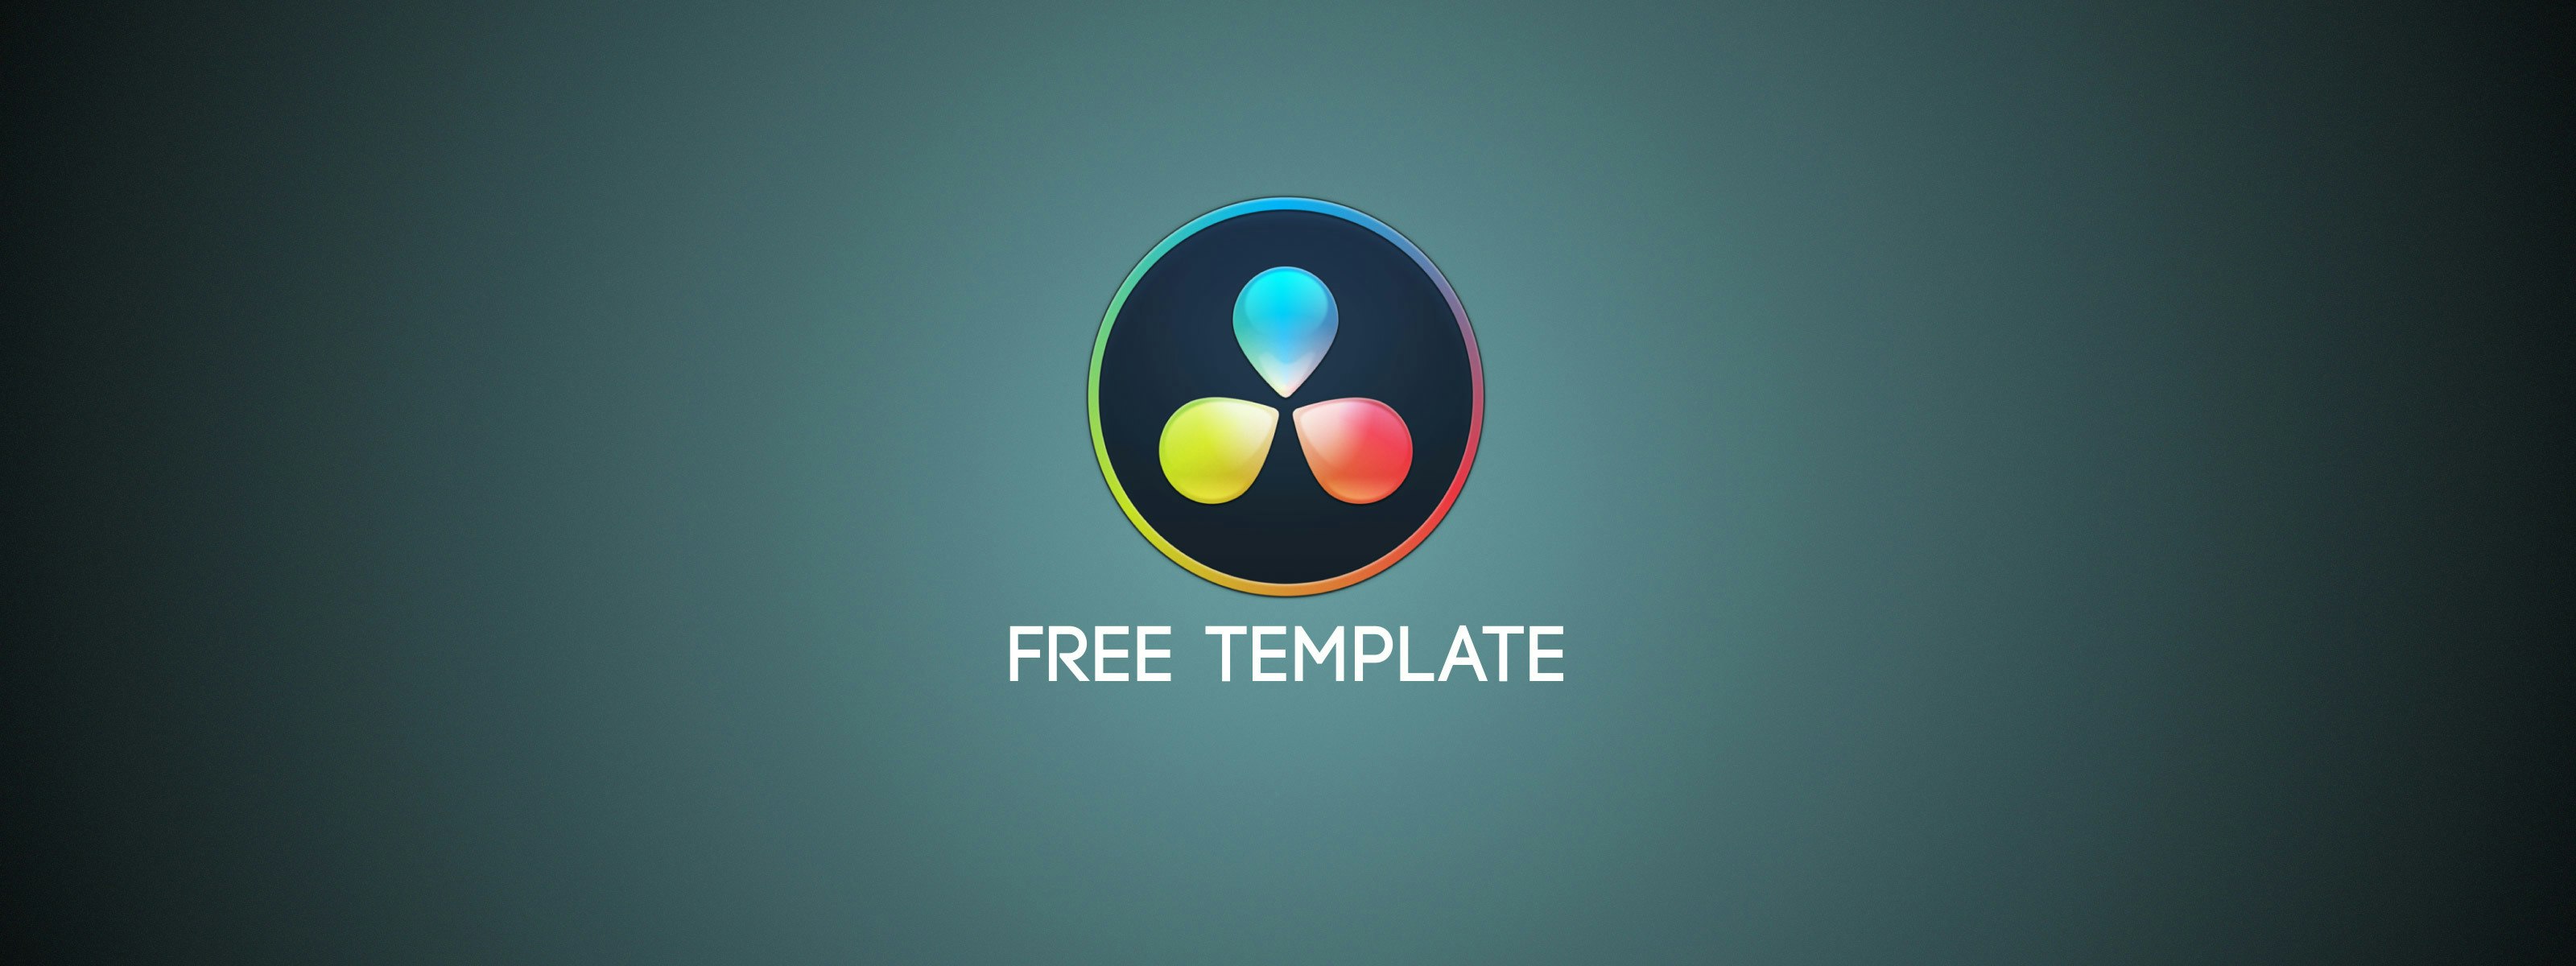 templates davinci resolve free